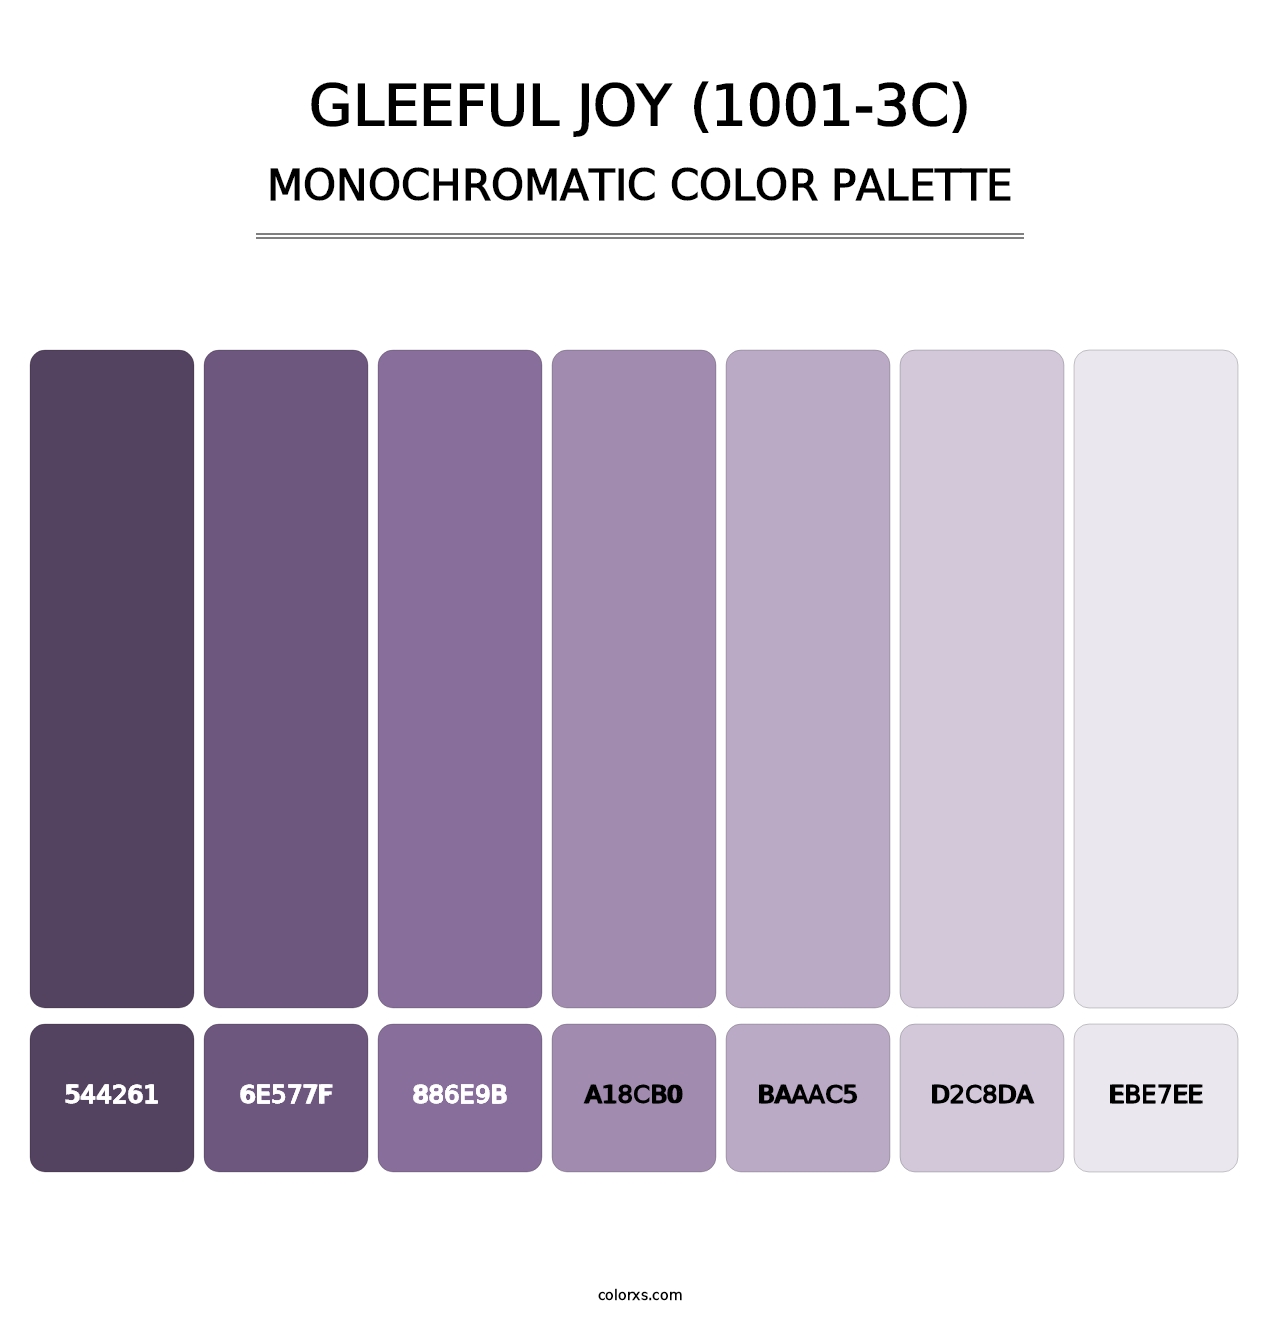 Gleeful Joy (1001-3C) - Monochromatic Color Palette